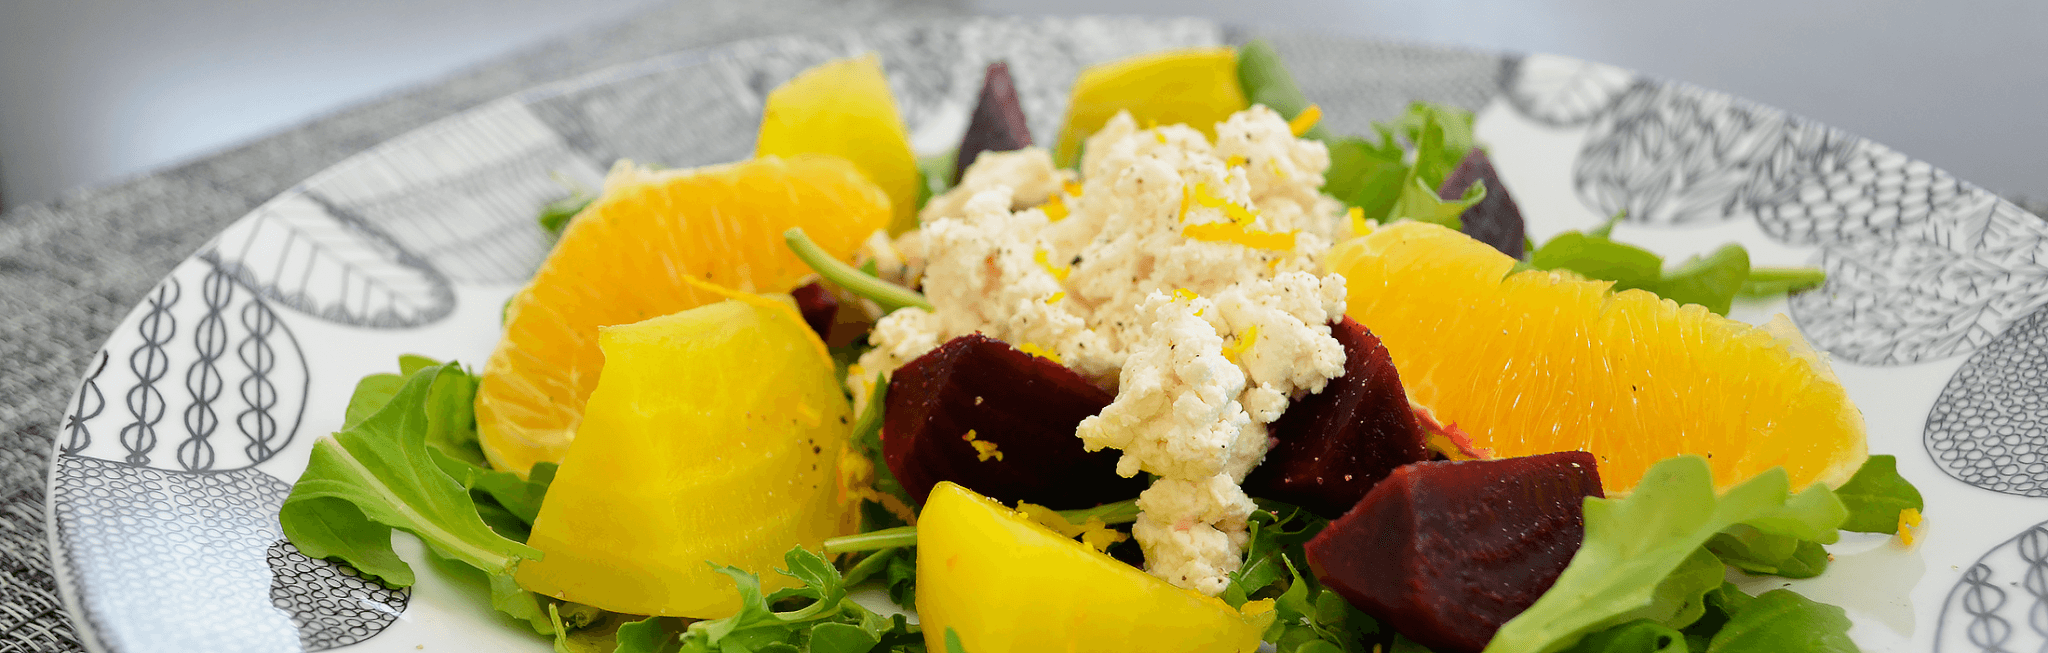 Beet and Orange Salad With Dairy-Free Ricotta